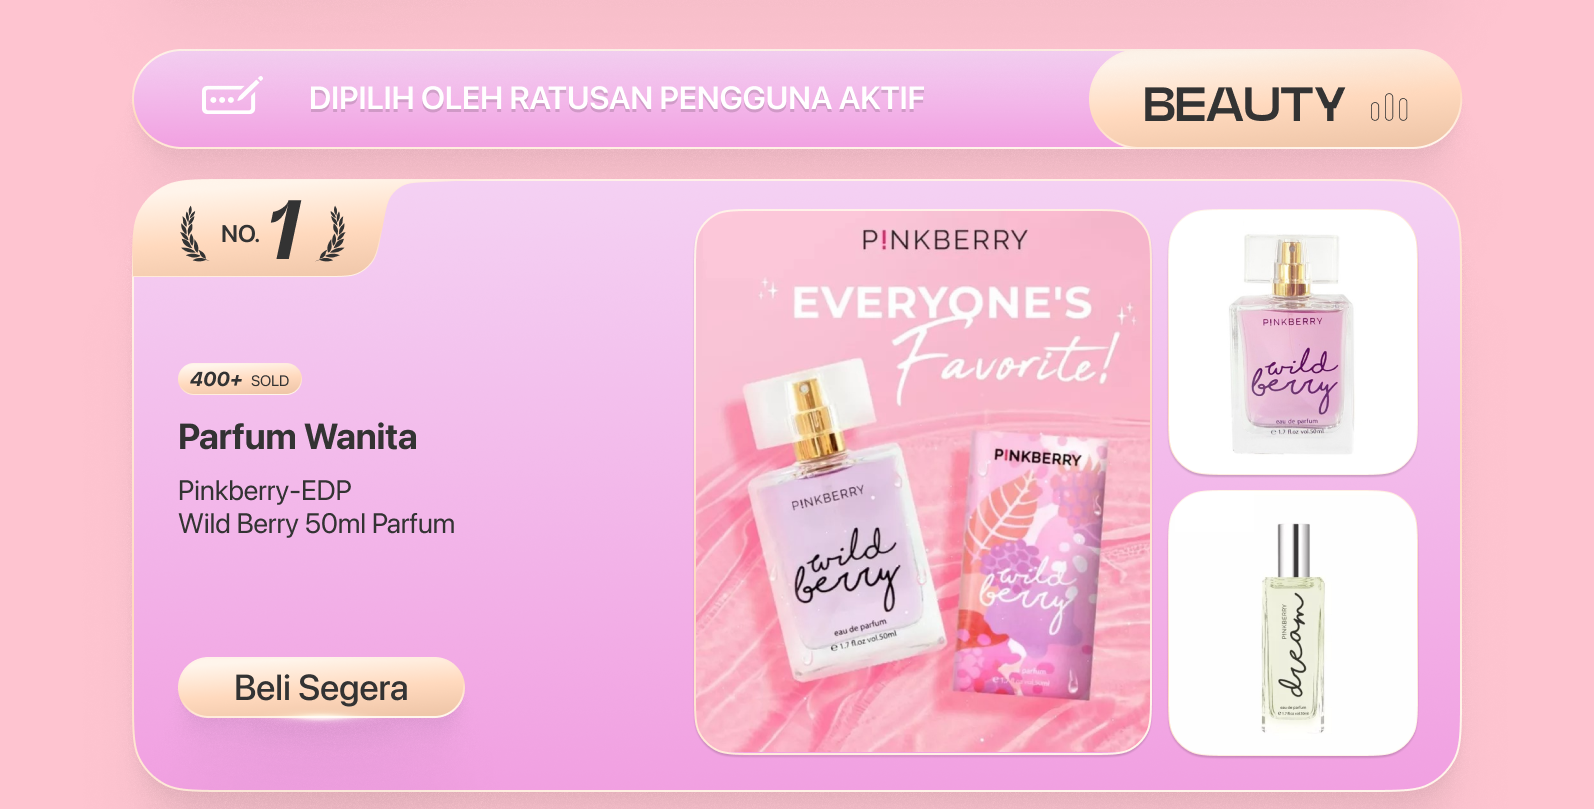 Pinkberry·EDPTwinkle 50ml Parfum